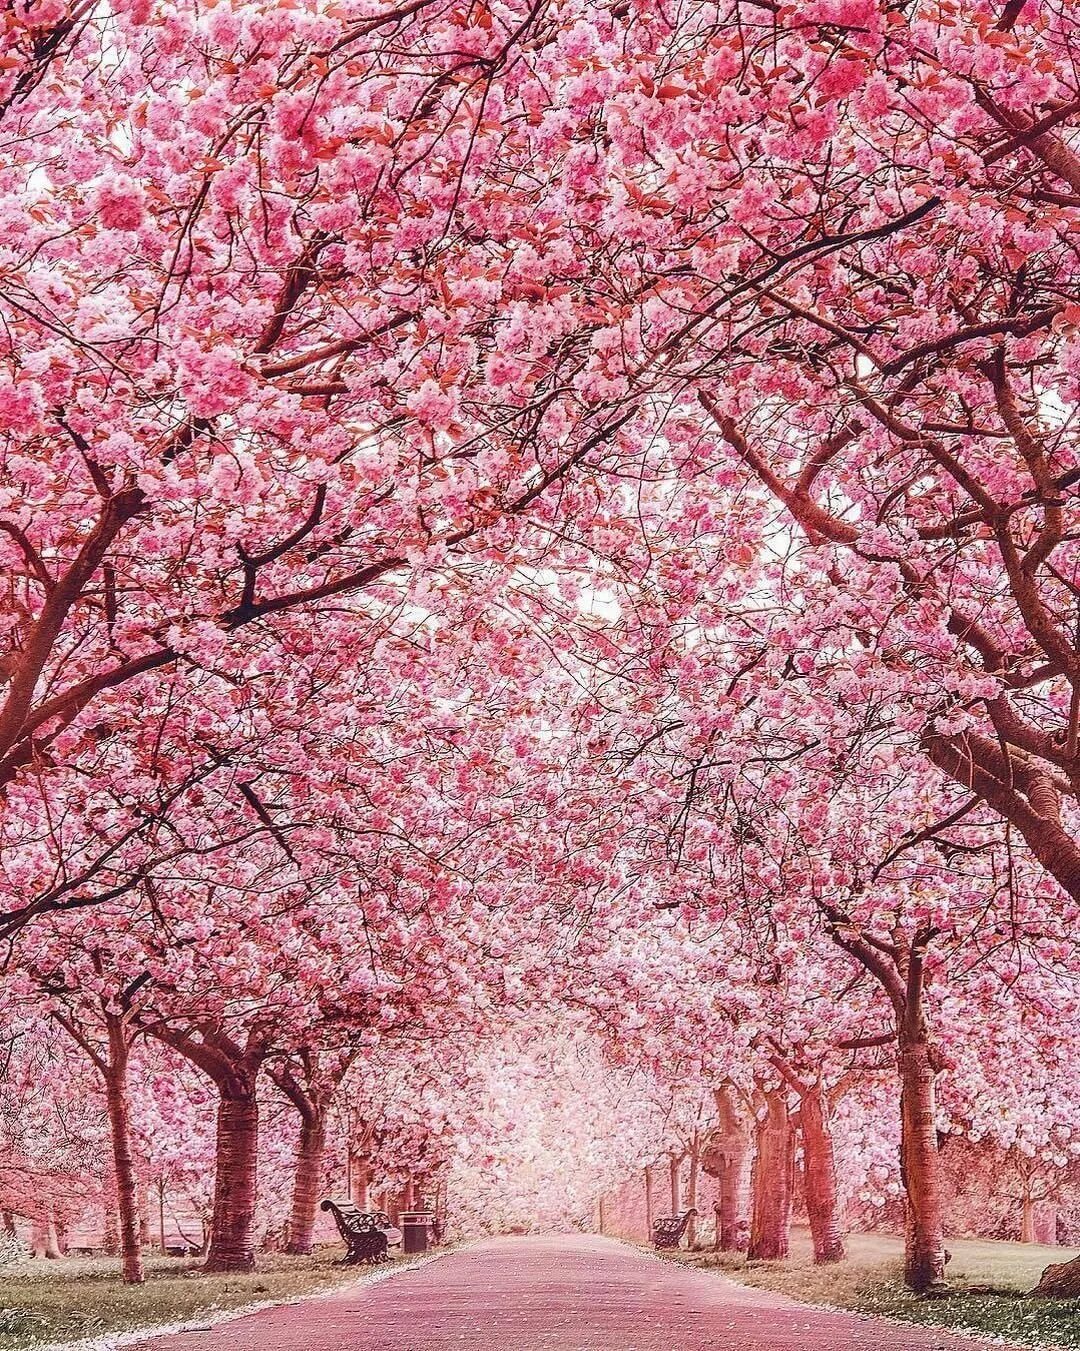 Черри блоссом дерево. Сакура черри блоссом. Сакура черри блоссом дерево. Pink черри блоссом дерево деревья парк. Sakura blossom